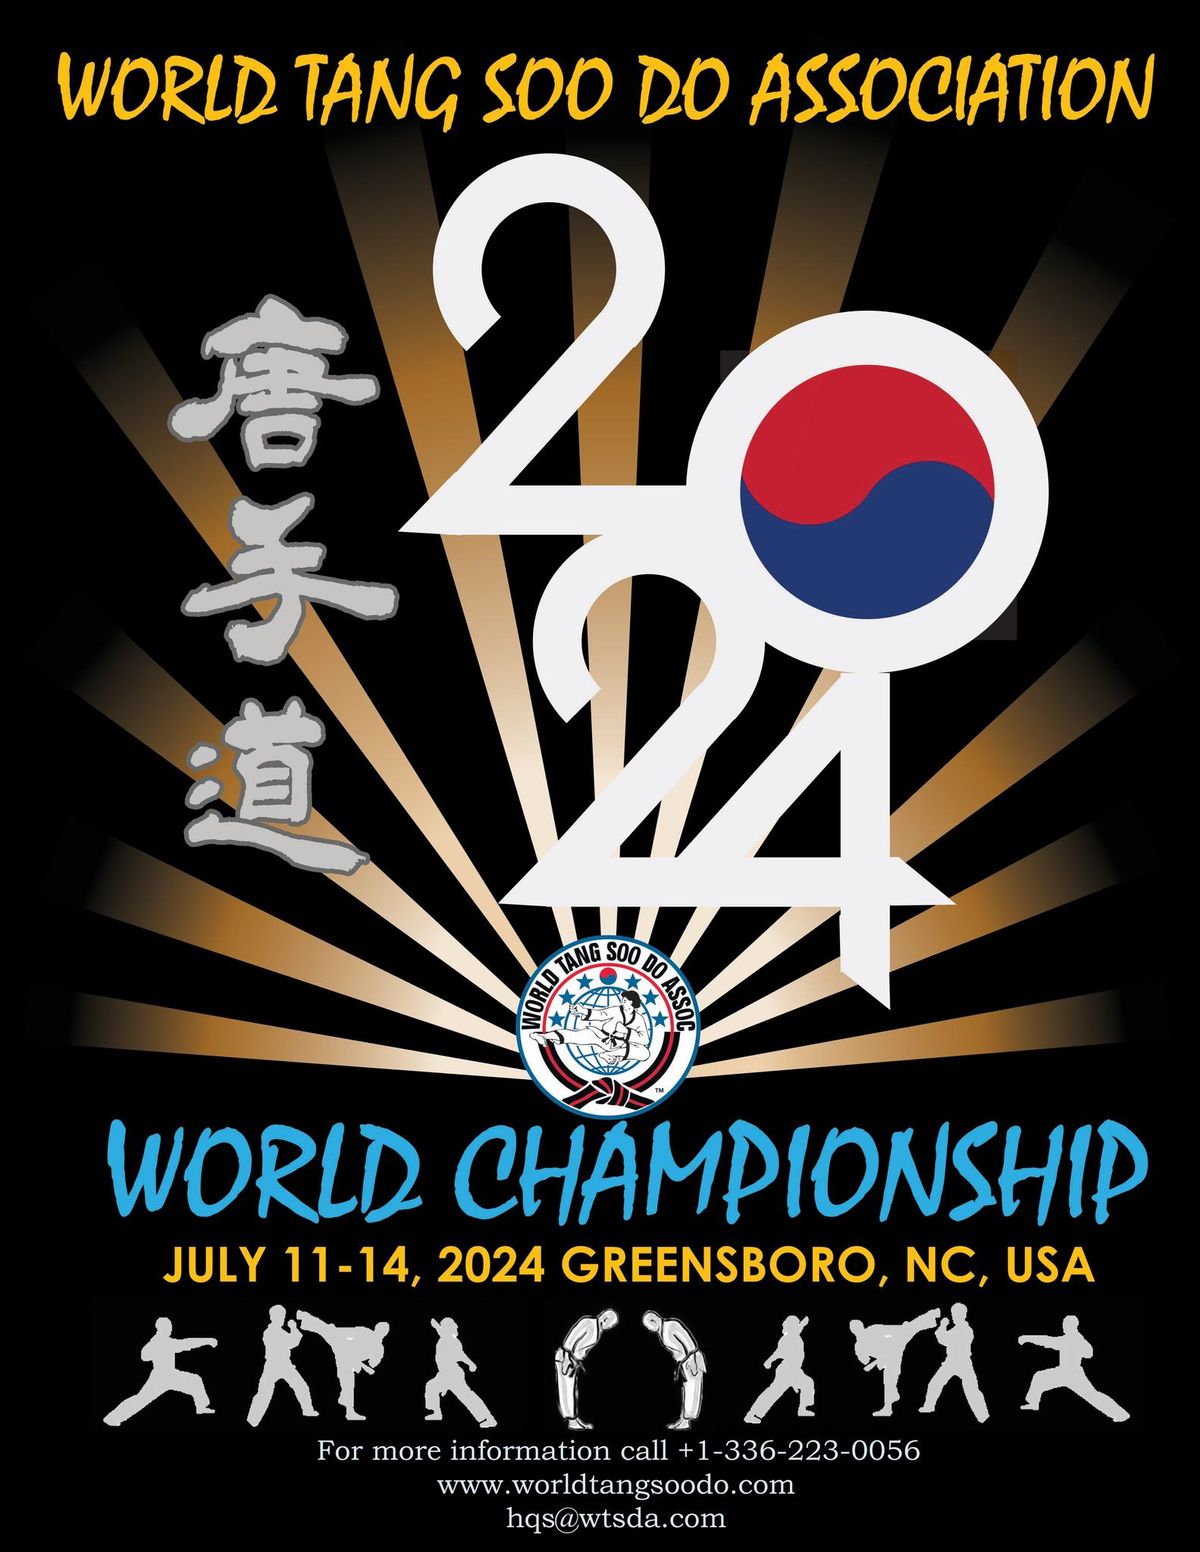 World Tang Soo Do Association World Championship 